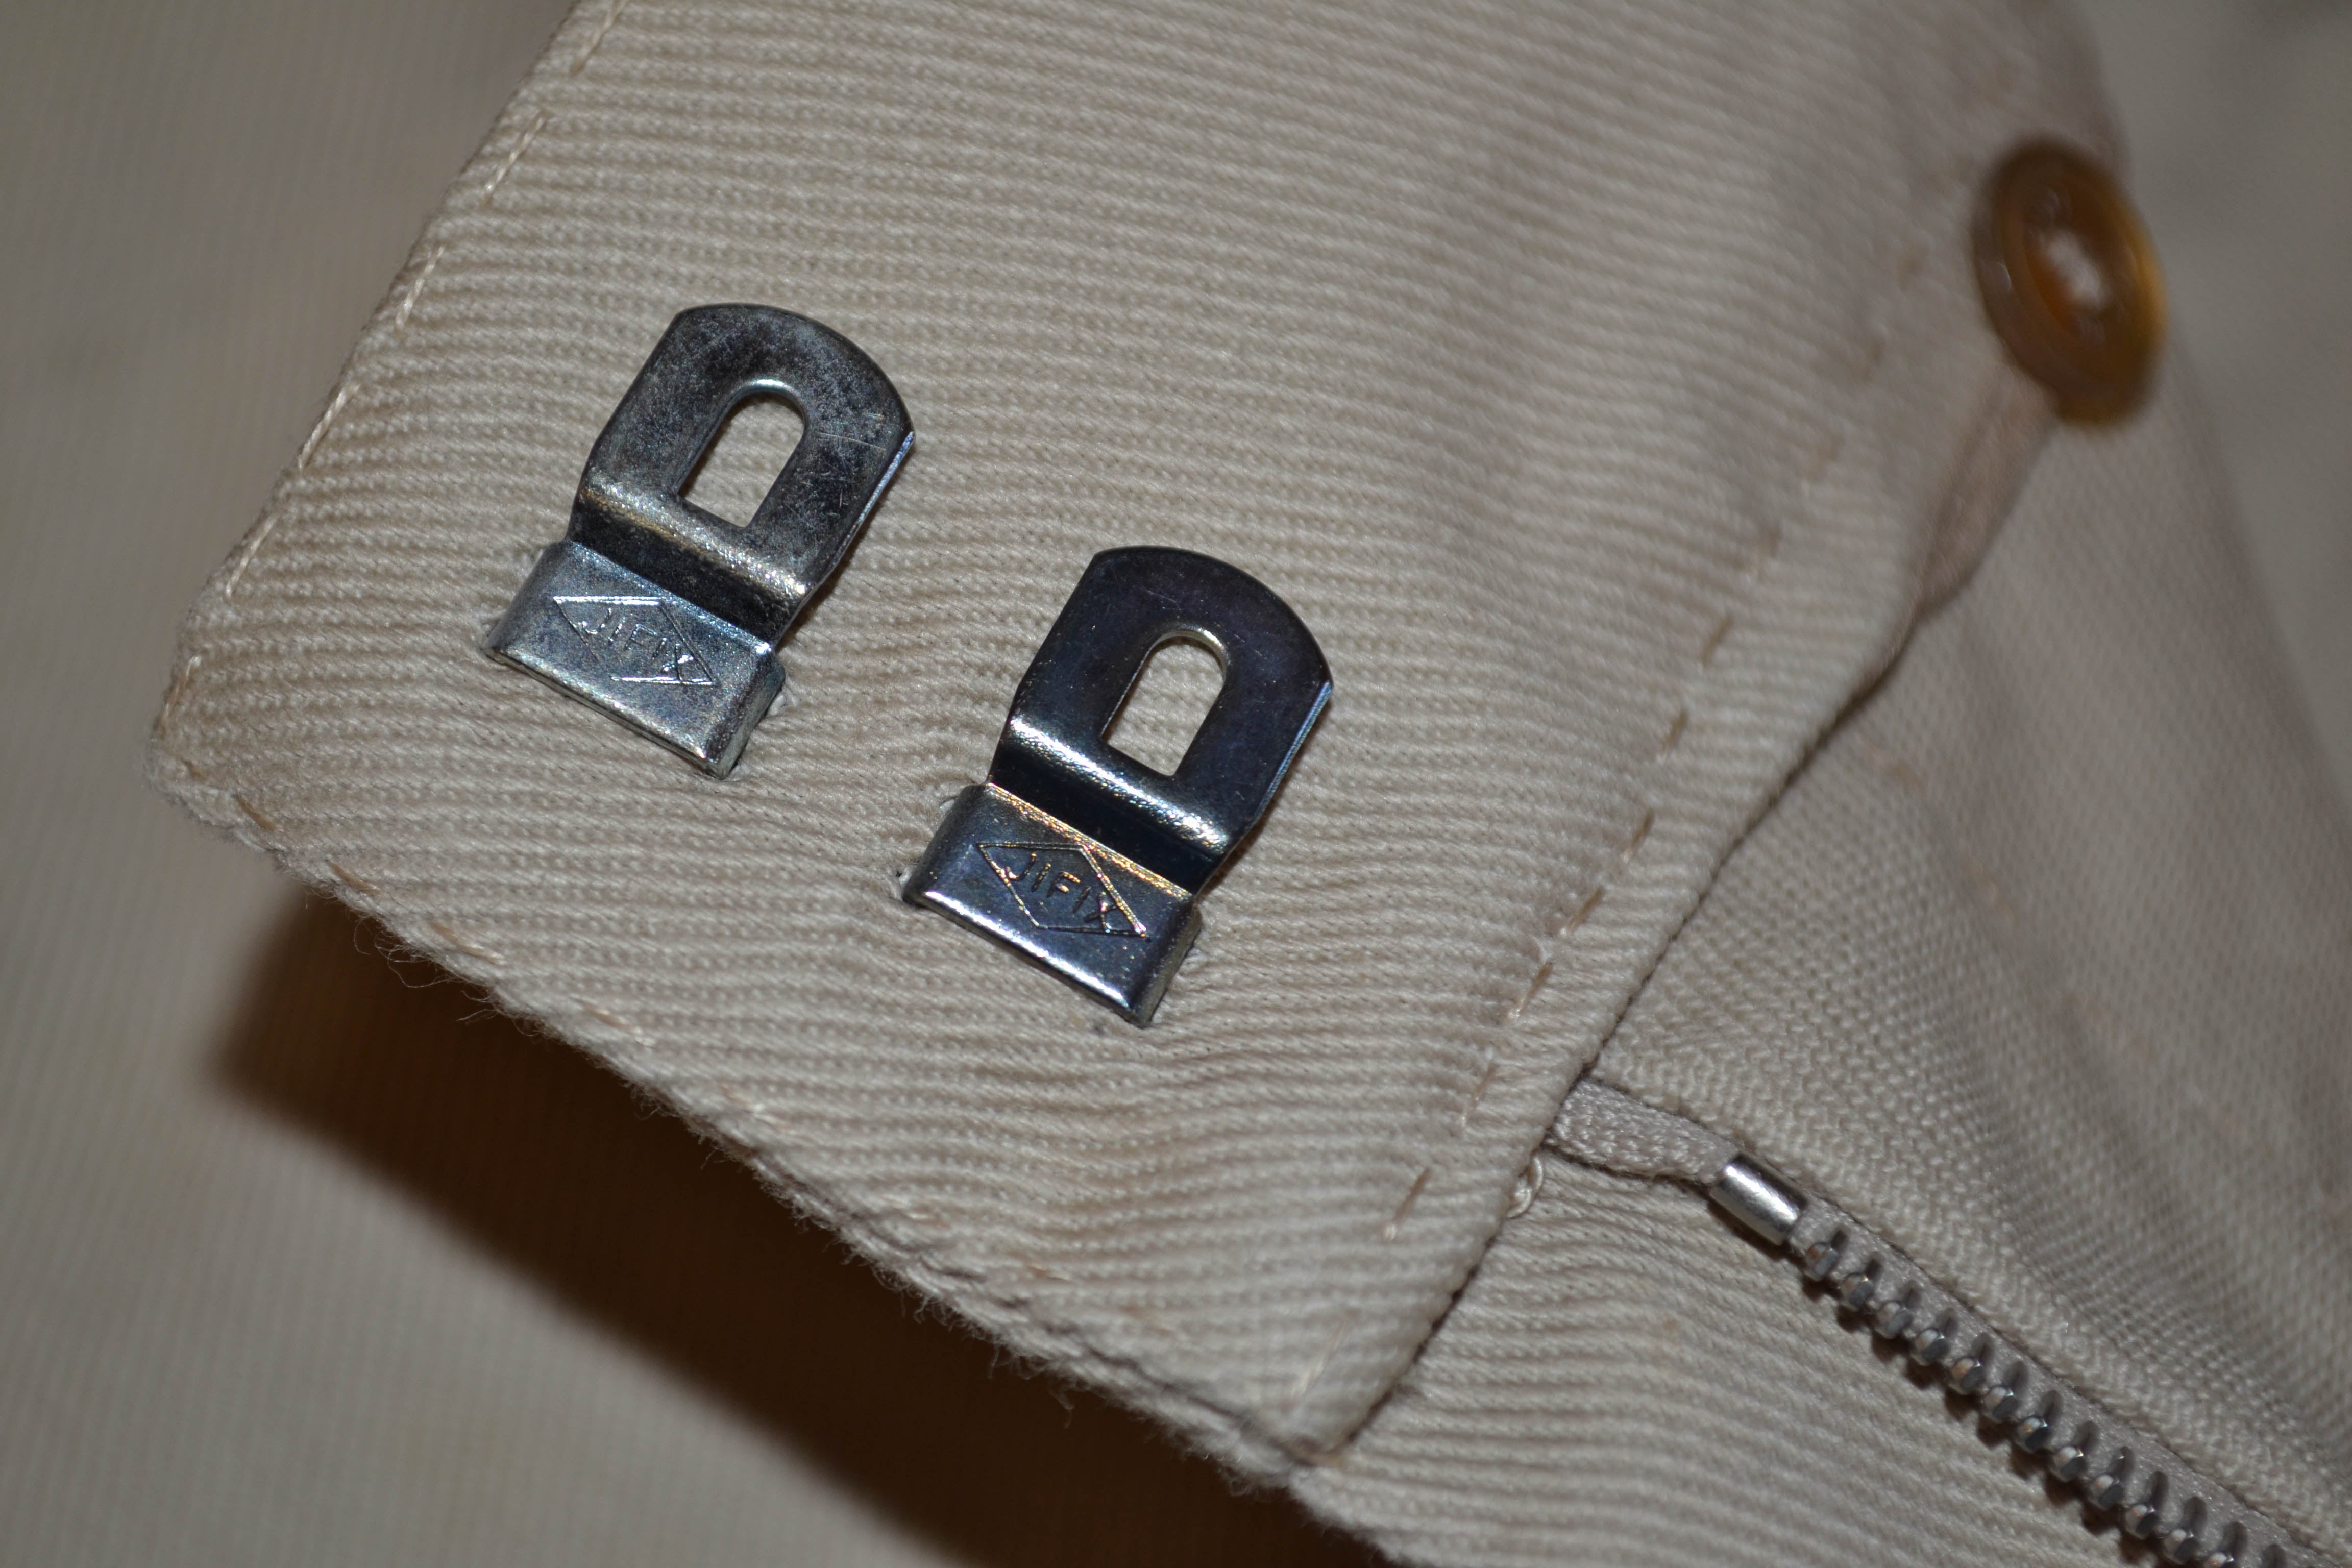 Trench coat Louis Vuitton Beige size 34 FR in Cotton - 32539775